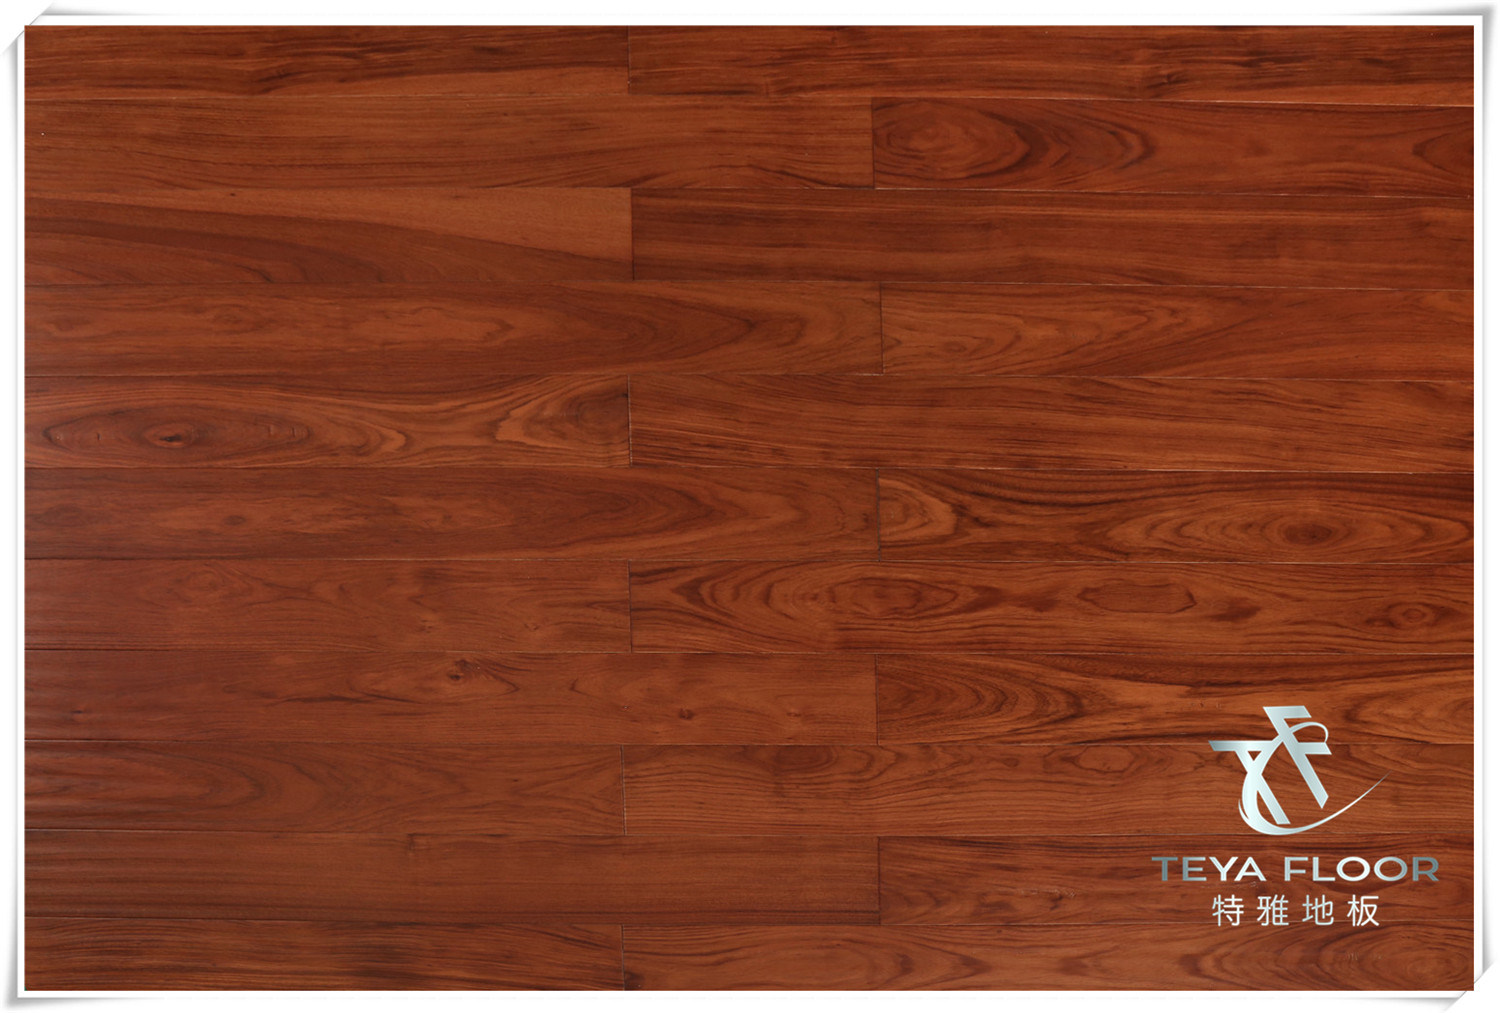 Acacia Solid Wood Flooring, Hardwood Flooring. Handscraped